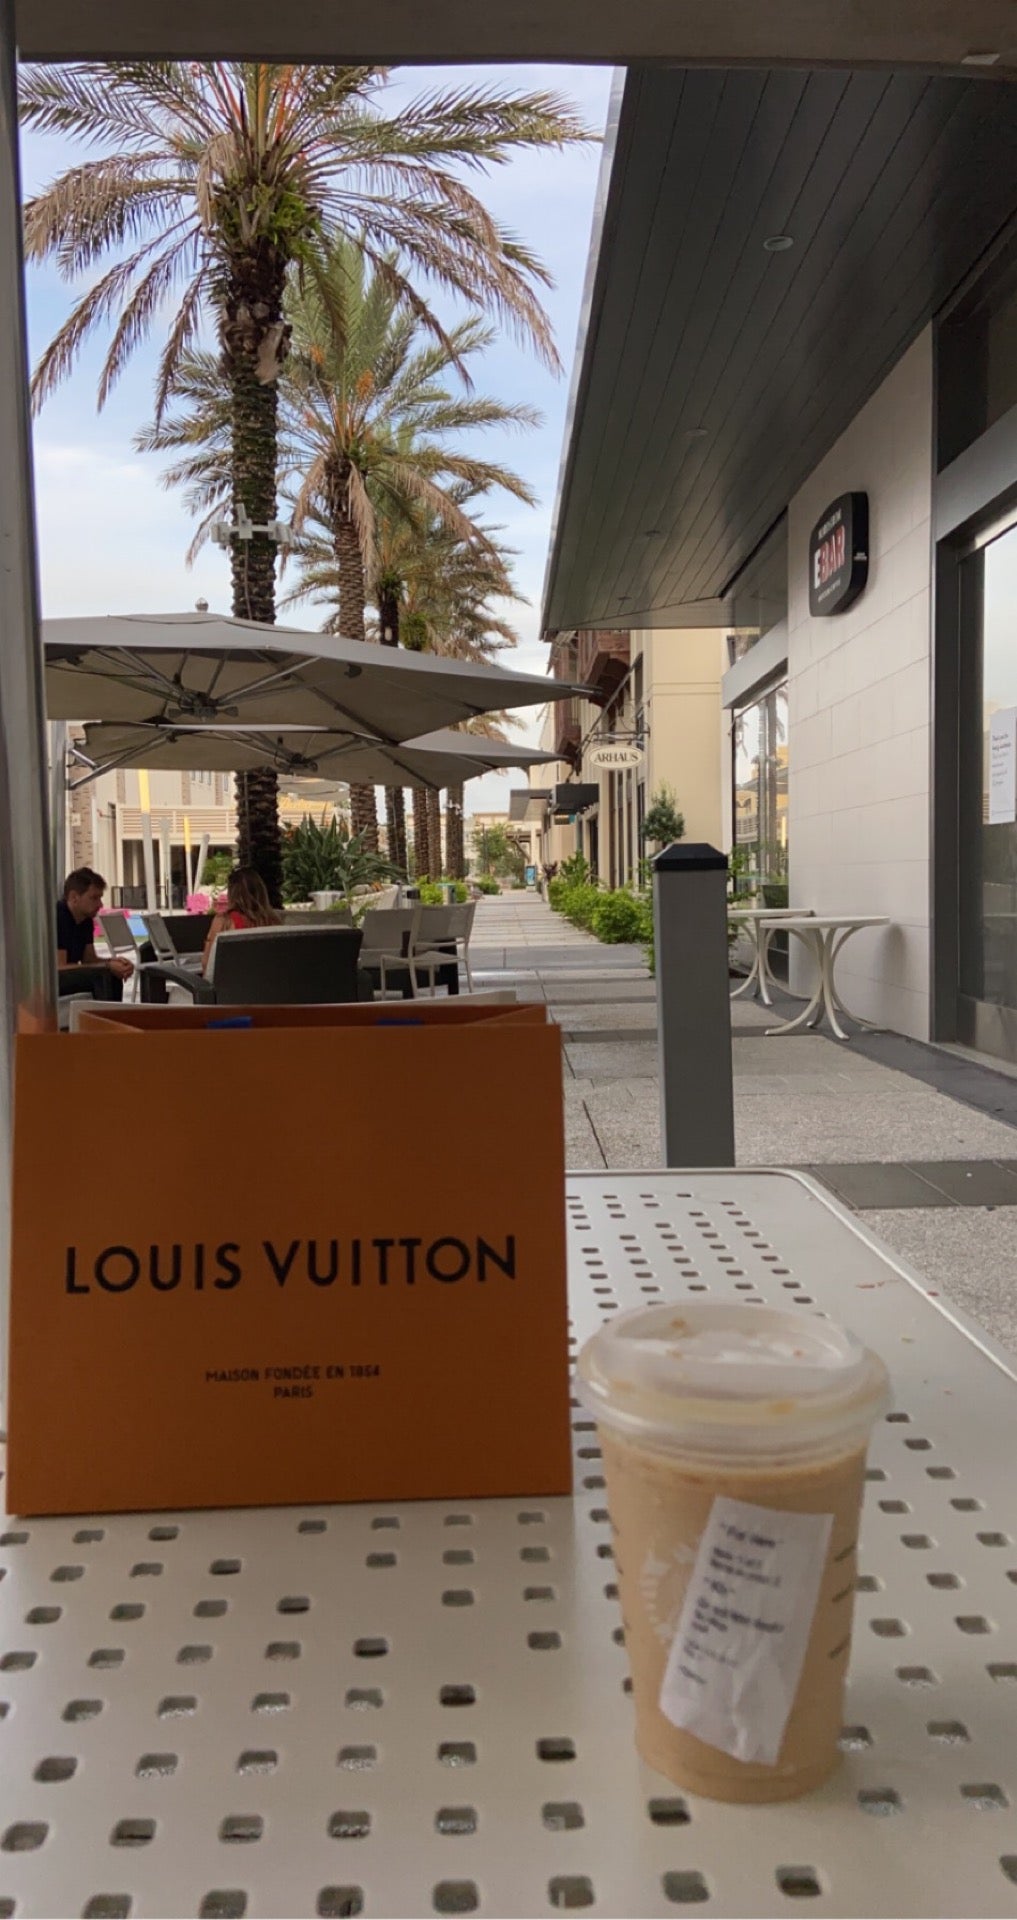 Louis Vuitton at St. Johns Town Center® - A Shopping Center in